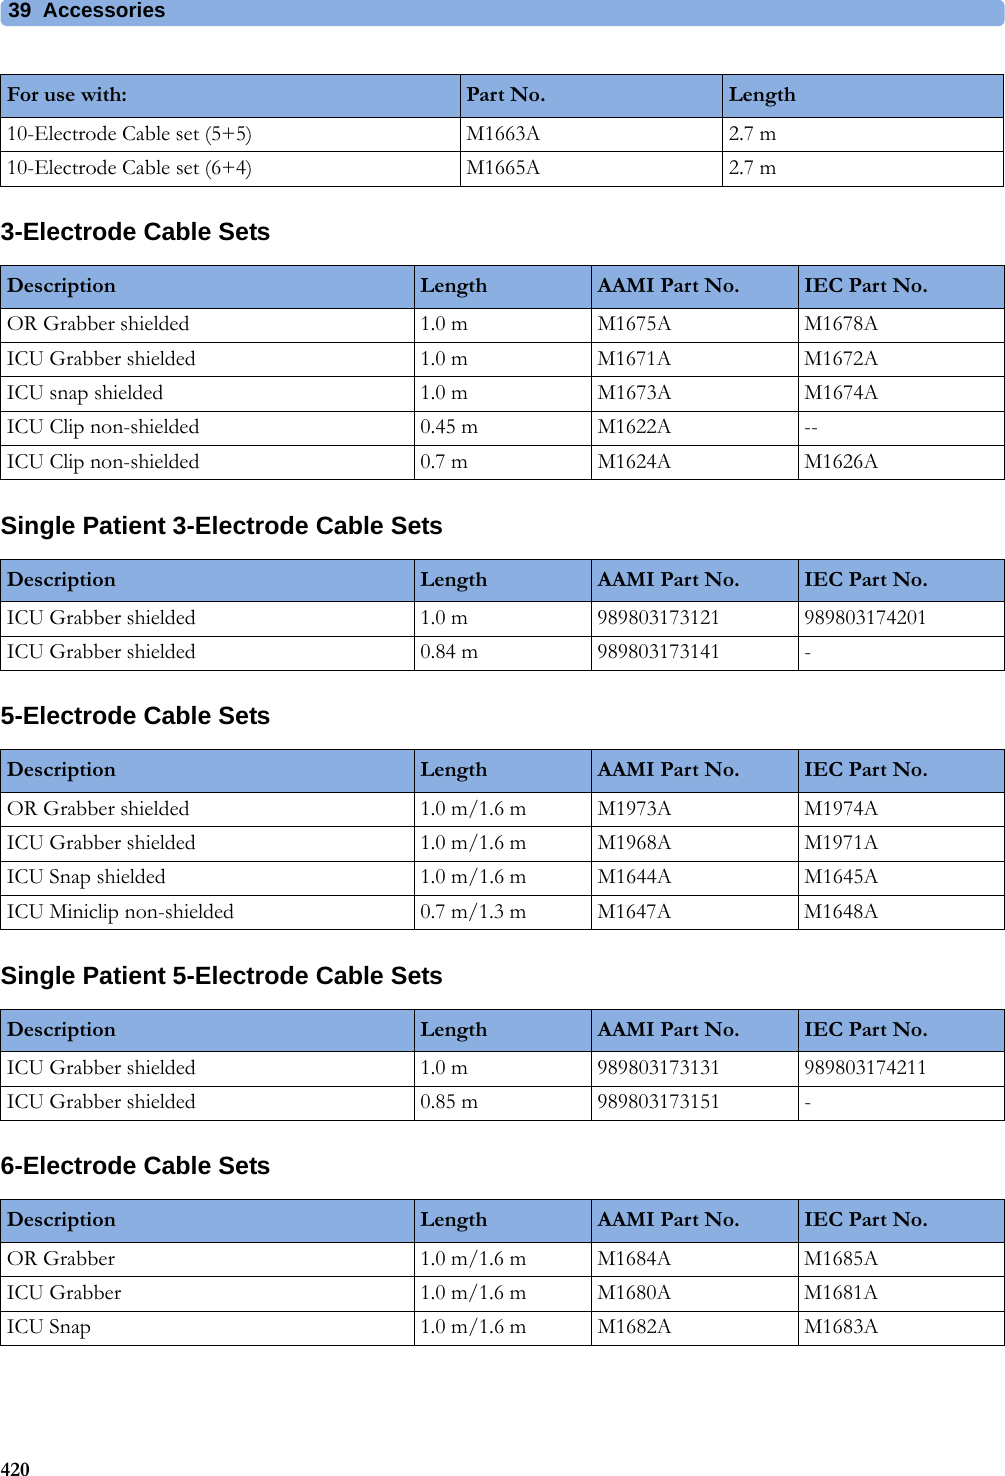 39 Accessories4203-Electrode Cable SetsSingle Patient 3-Electrode Cable Sets5-Electrode Cable SetsSingle Patient 5-Electrode Cable Sets6-Electrode Cable Sets10-Electrode Cable set (5+5) M1663A 2.7 m10-Electrode Cable set (6+4) M1665A 2.7 mFor use with: Part No. LengthDescription Length AAMI Part No. IEC Part No.OR Grabber shielded 1.0 m M1675A M1678AICU Grabber shielded 1.0 m M1671A M1672AICU snap shielded 1.0 m M1673A M1674AICU Clip non-shielded 0.45 m M1622A --ICU Clip non-shielded 0.7 m M1624A M1626ADescription Length AAMI Part No. IEC Part No.ICU Grabber shielded 1.0 m 989803173121 989803174201ICU Grabber shielded 0.84 m 989803173141 -Description Length AAMI Part No. IEC Part No.OR Grabber shielded 1.0 m/1.6 m M1973A M1974AICU Grabber shielded 1.0 m/1.6 m M1968A M1971AICU Snap shielded 1.0 m/1.6 m M1644A M1645AICU Miniclip non-shielded 0.7 m/1.3 m M1647A M1648ADescription Length AAMI Part No. IEC Part No.ICU Grabber shielded 1.0 m 989803173131 989803174211ICU Grabber shielded 0.85 m 989803173151 -Description Length AAMI Part No. IEC Part No.OR Grabber 1.0 m/1.6 m M1684A M1685AICU Grabber 1.0 m/1.6 m M1680A M1681AICU Snap 1.0 m/1.6 m M1682A M1683A